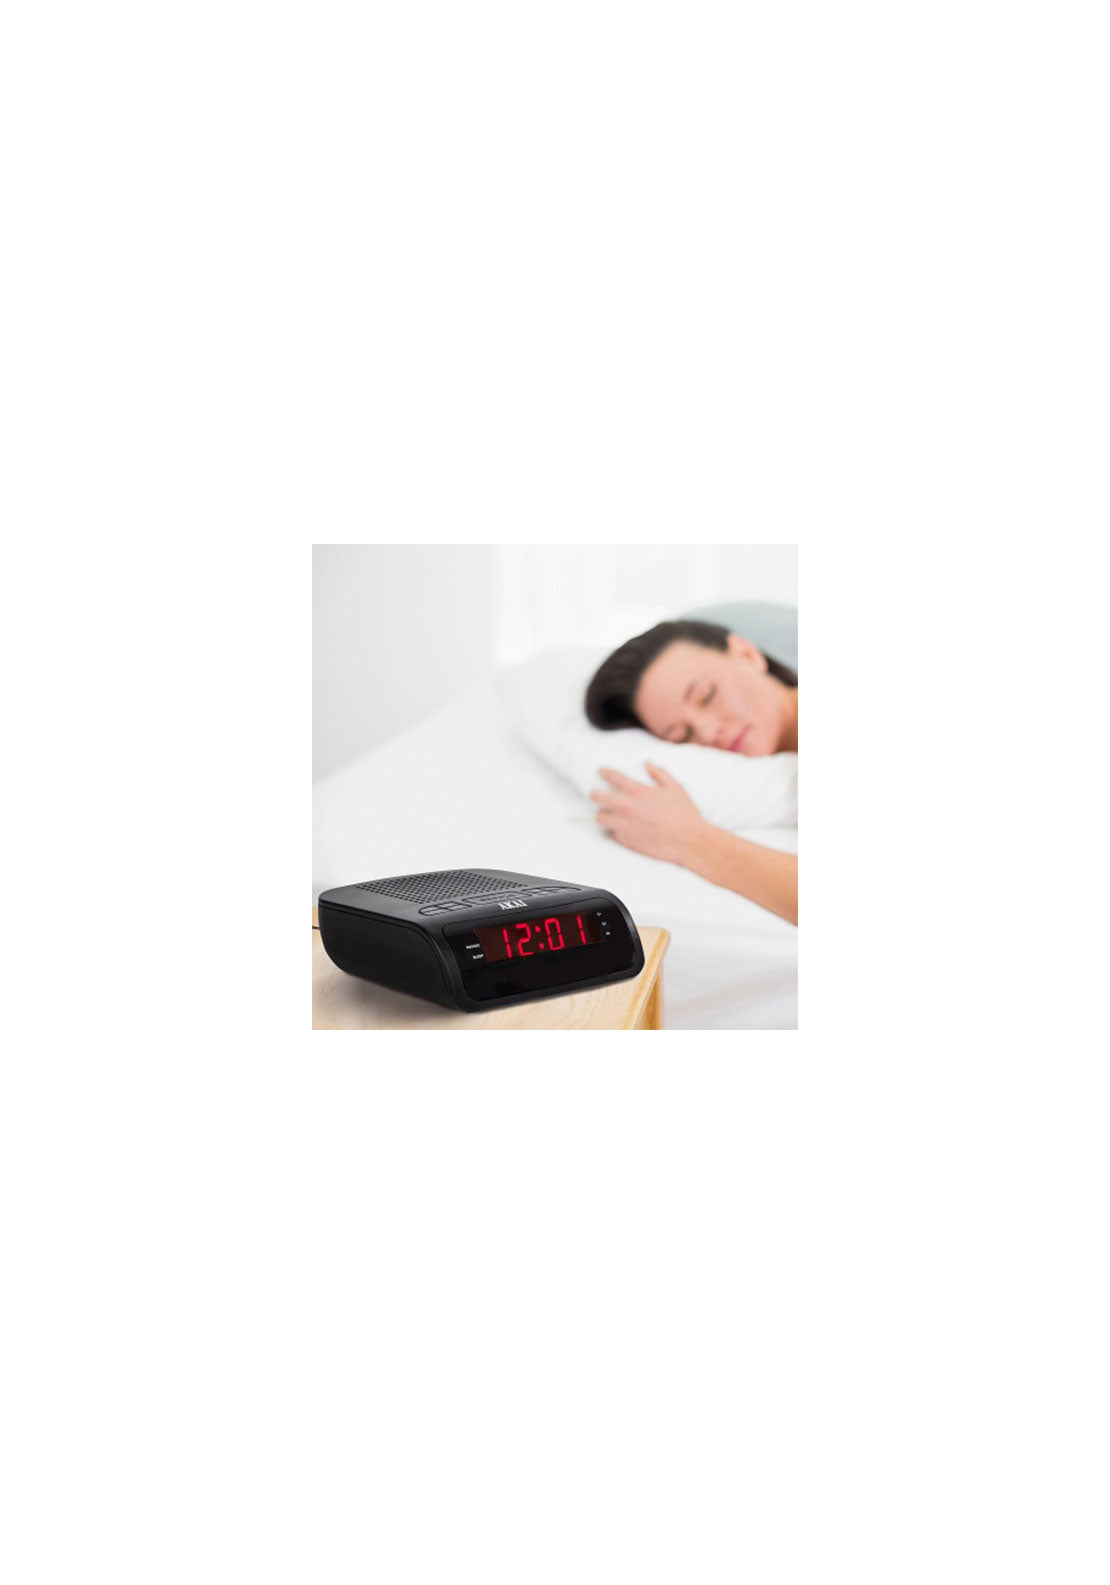 Akai Am/Fm Alarm Clock Radio With Led Display | A61020 - Black 4 Shaws Department Stores